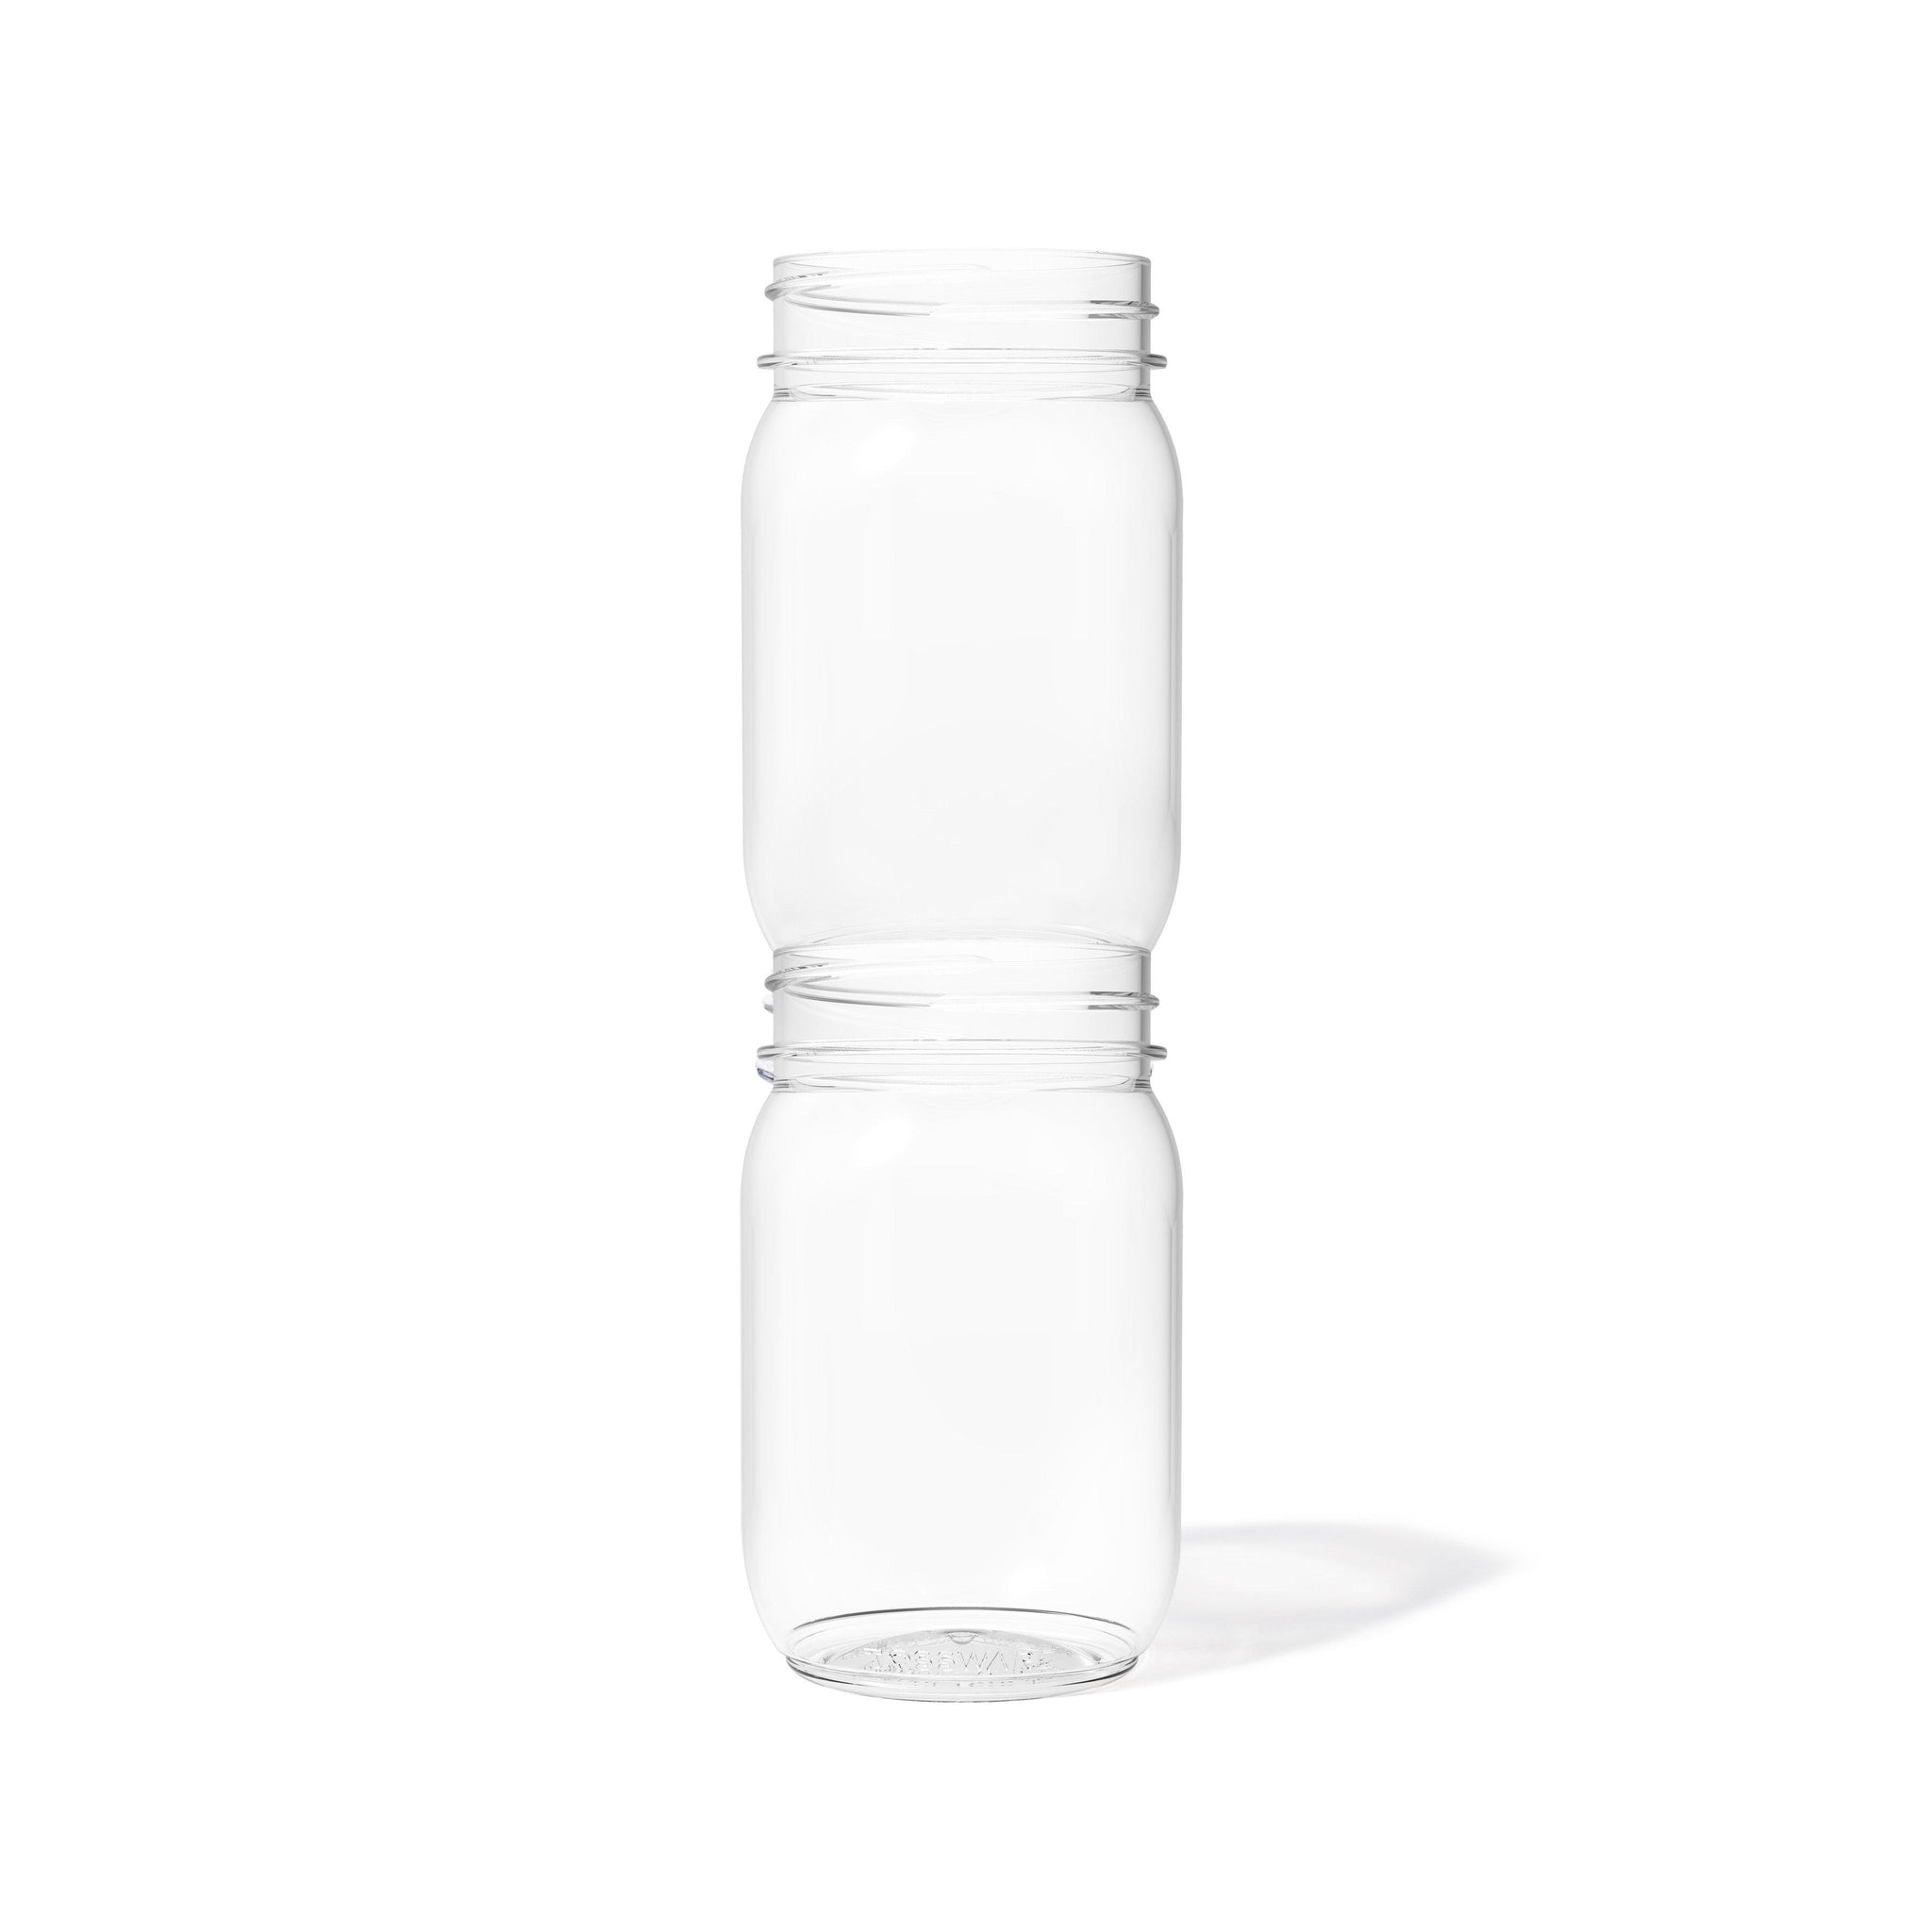 Pair Of Glass Nautical Mason Jars With Reusable Straws